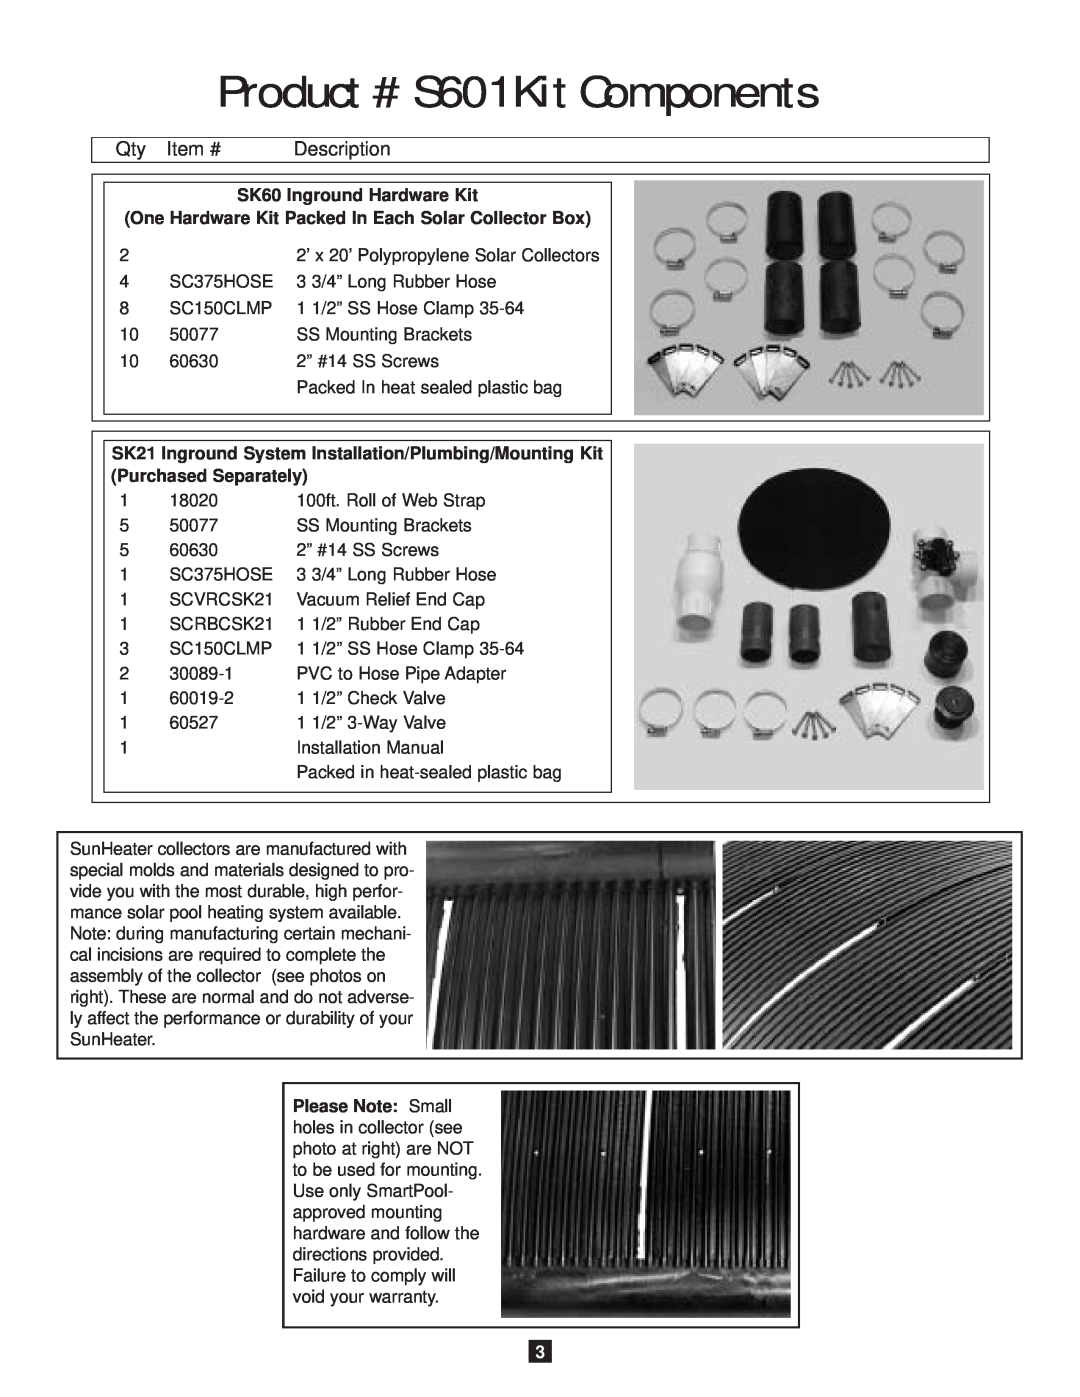 SmartPool Inc operation manual Product # S601 Kit Components, Item #, Description 